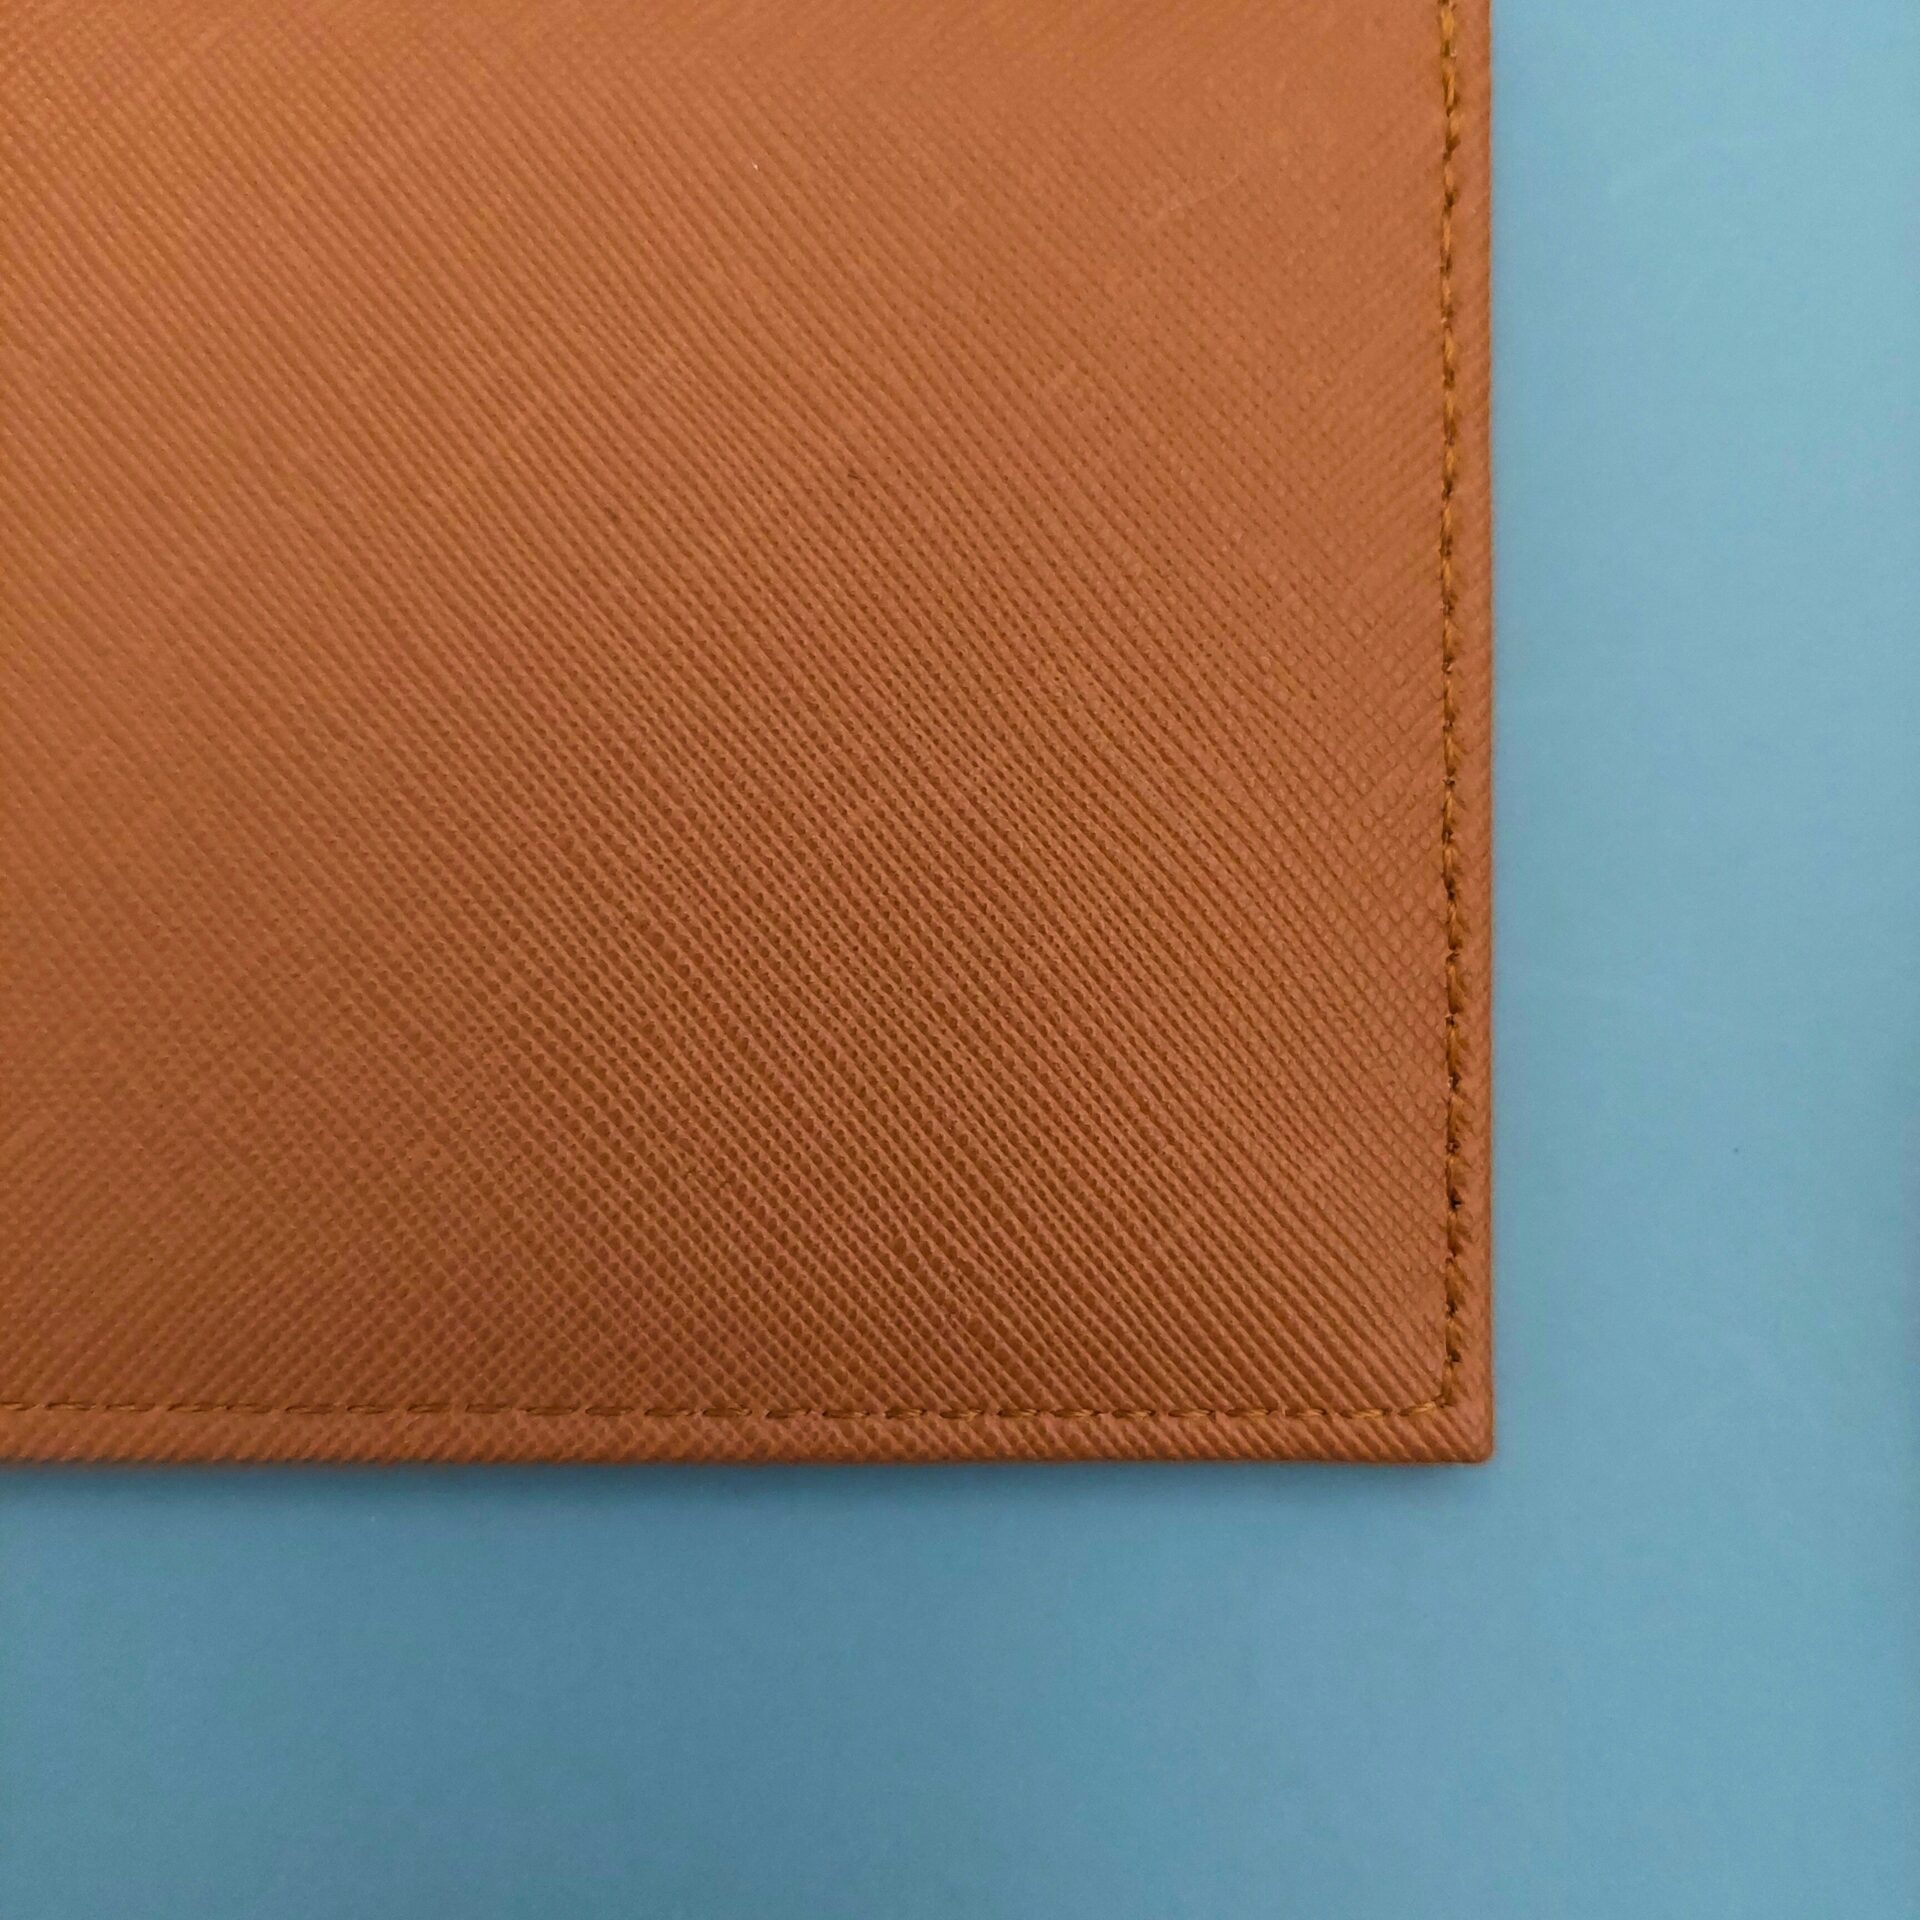 card holder corporate gift singapore leather karta back workmanship